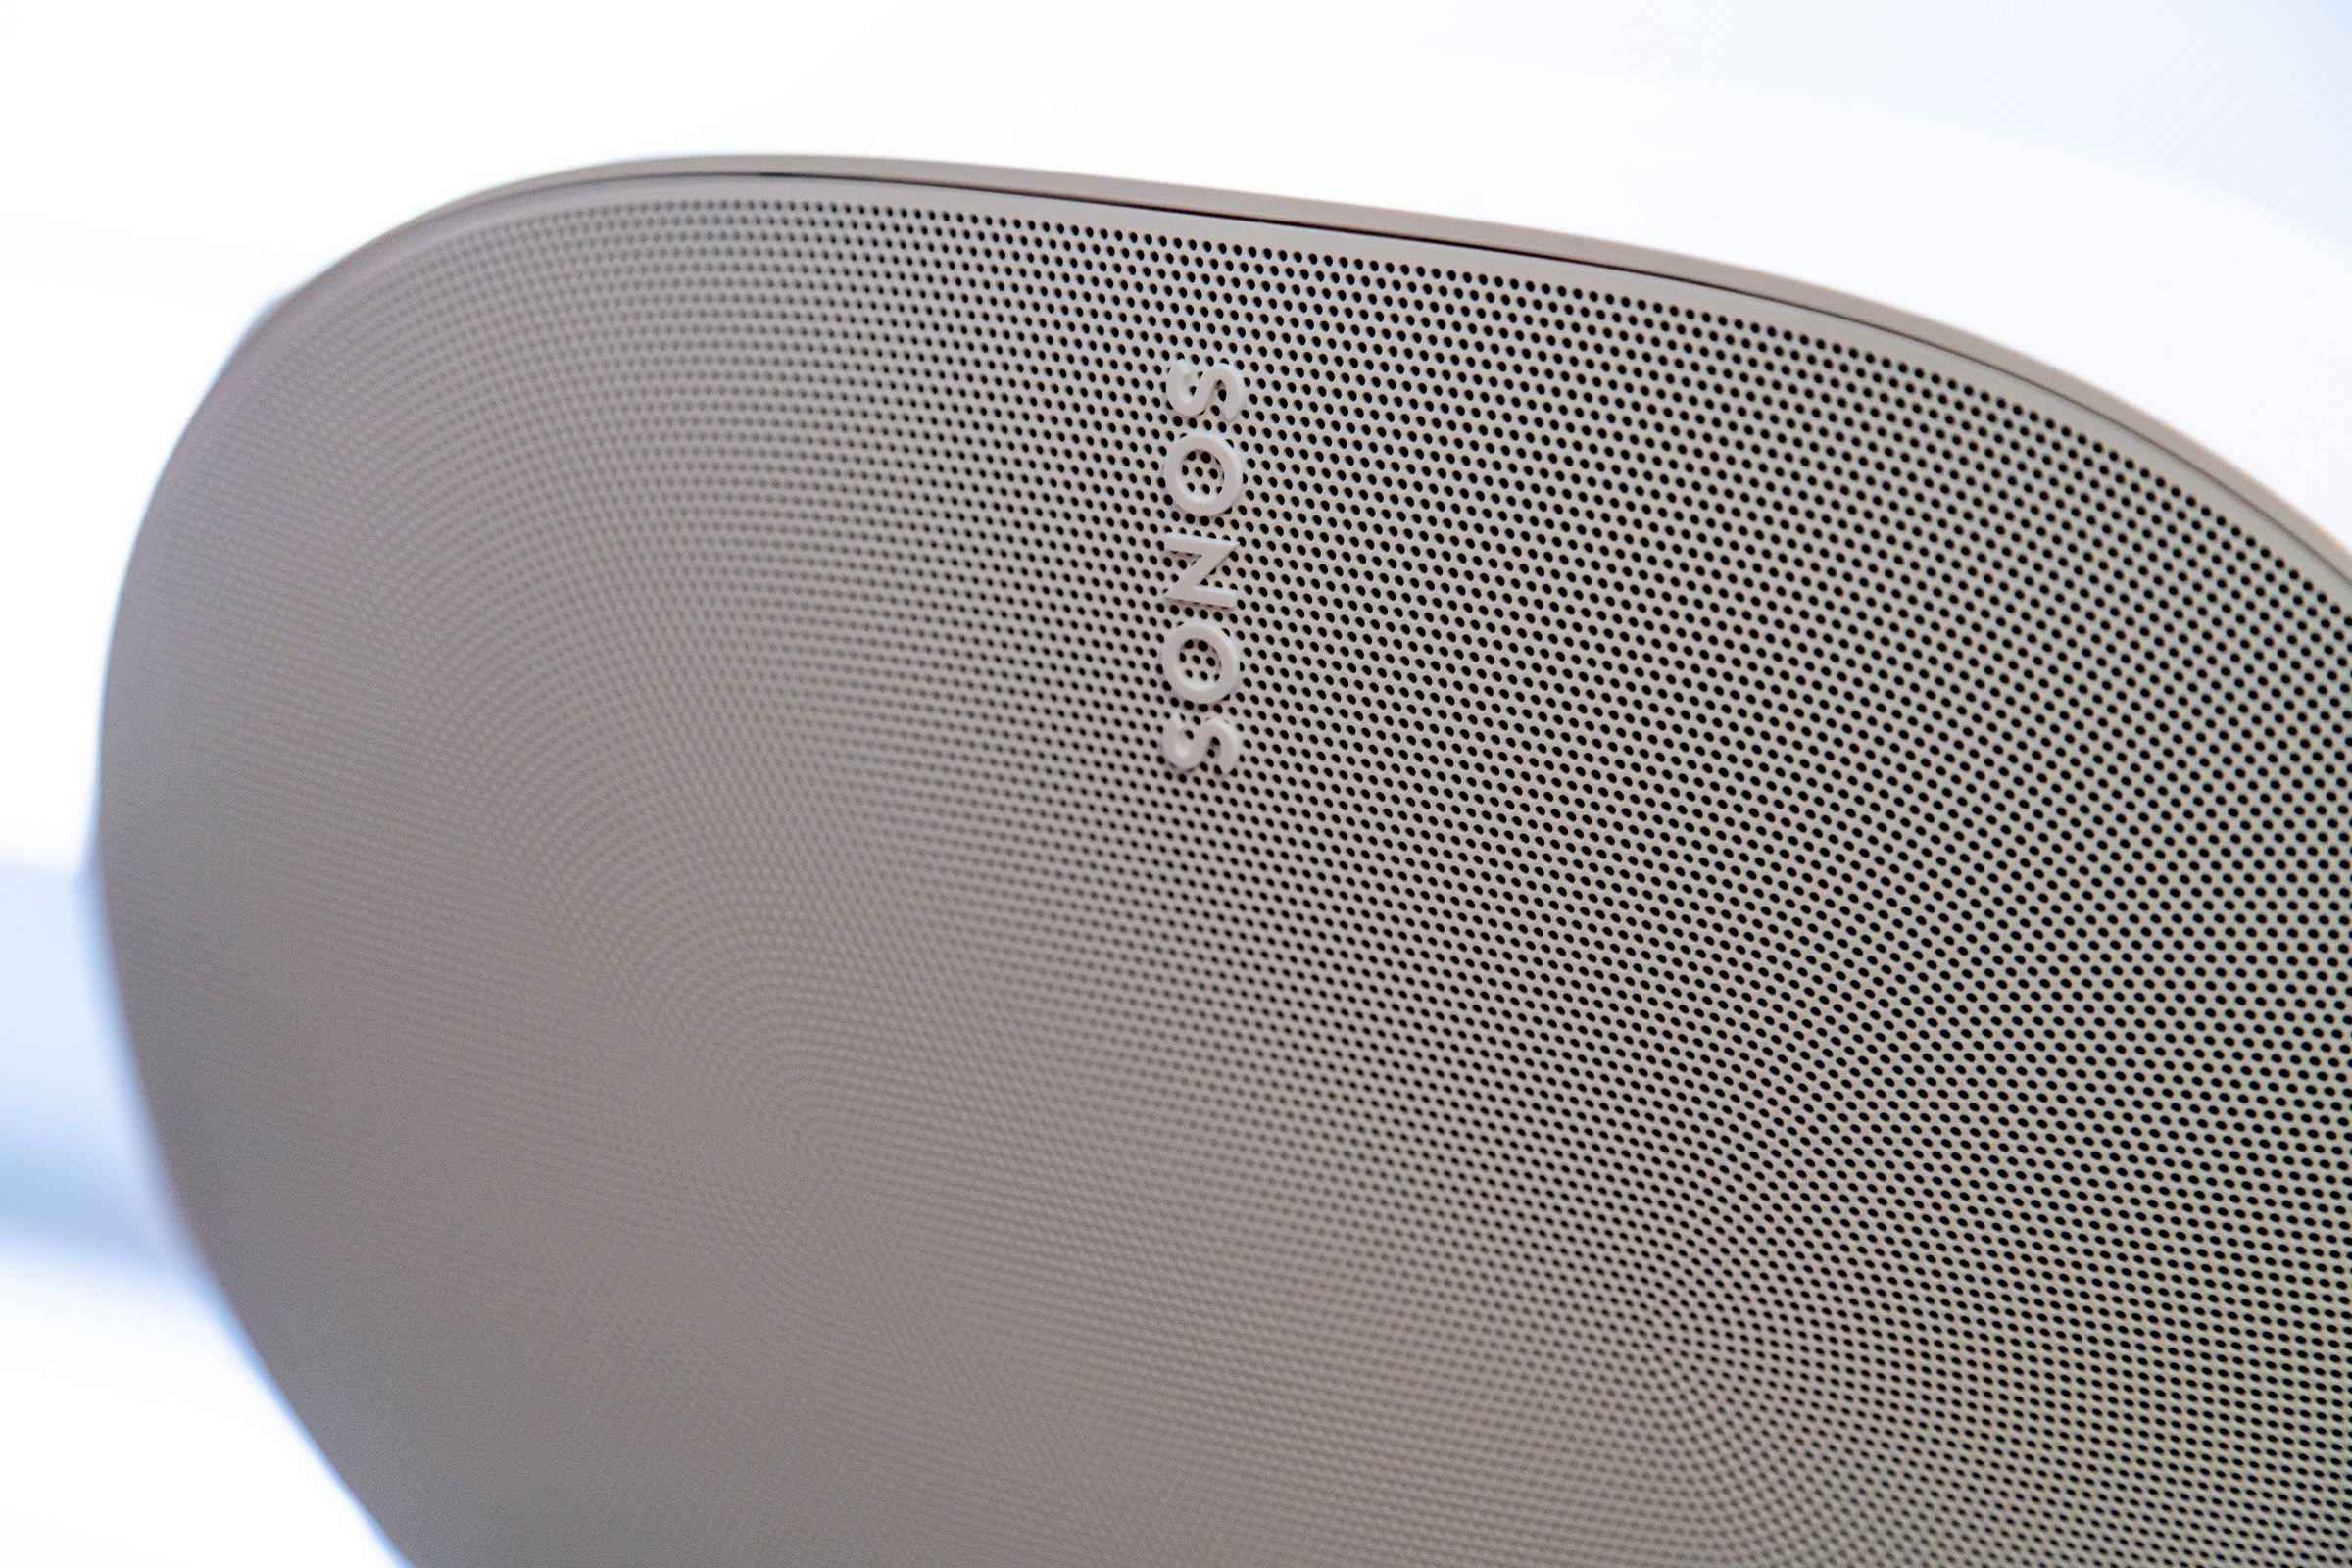 A close-up photo of the Sonos Era 300 speaker.